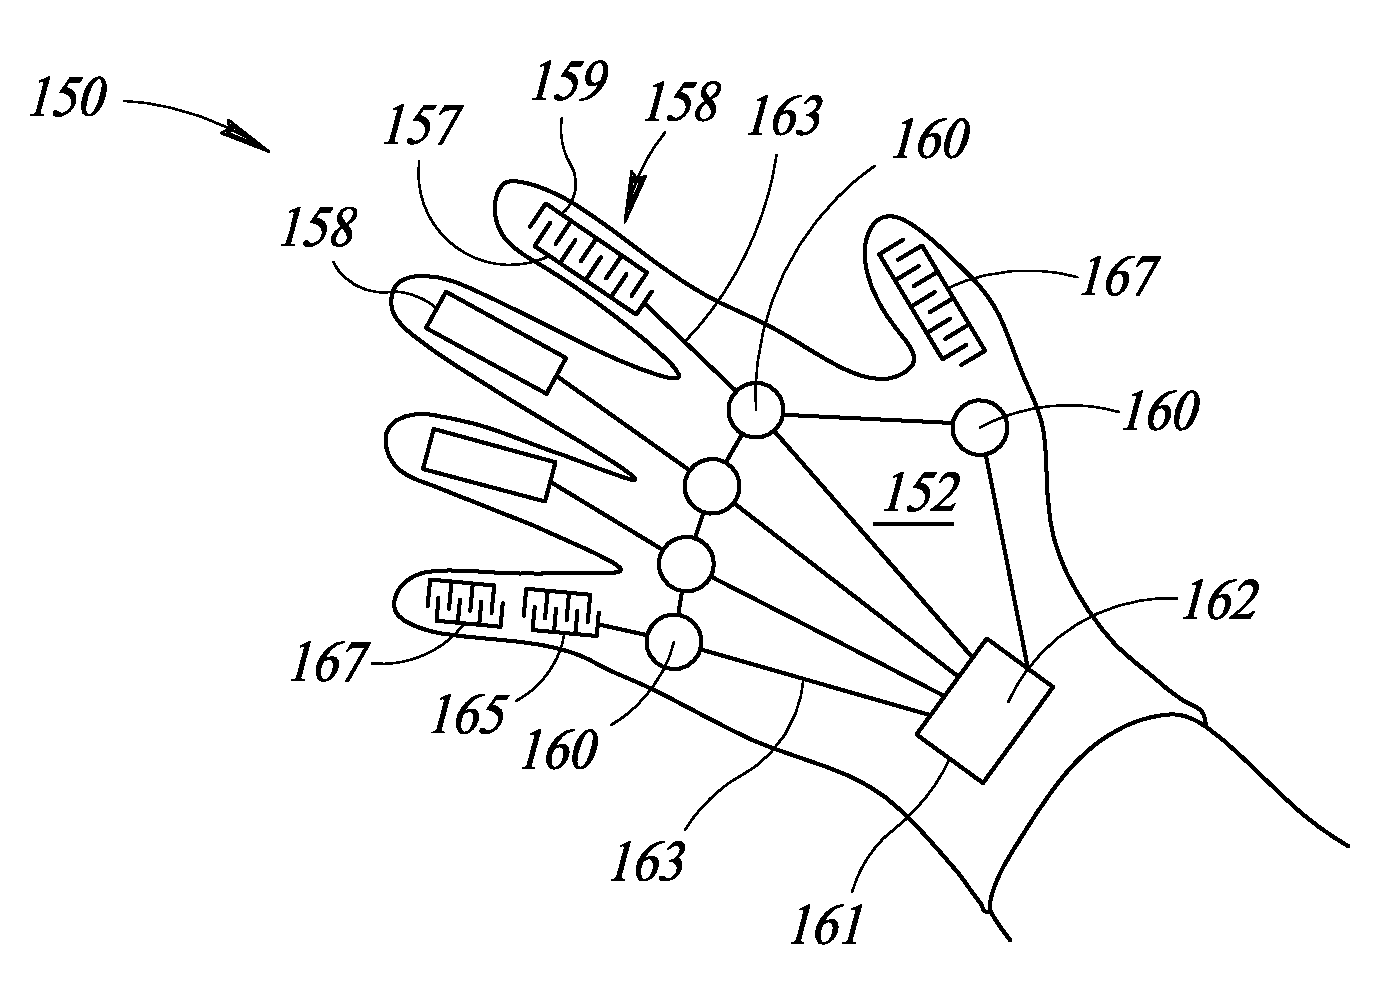 Flexible smart glove